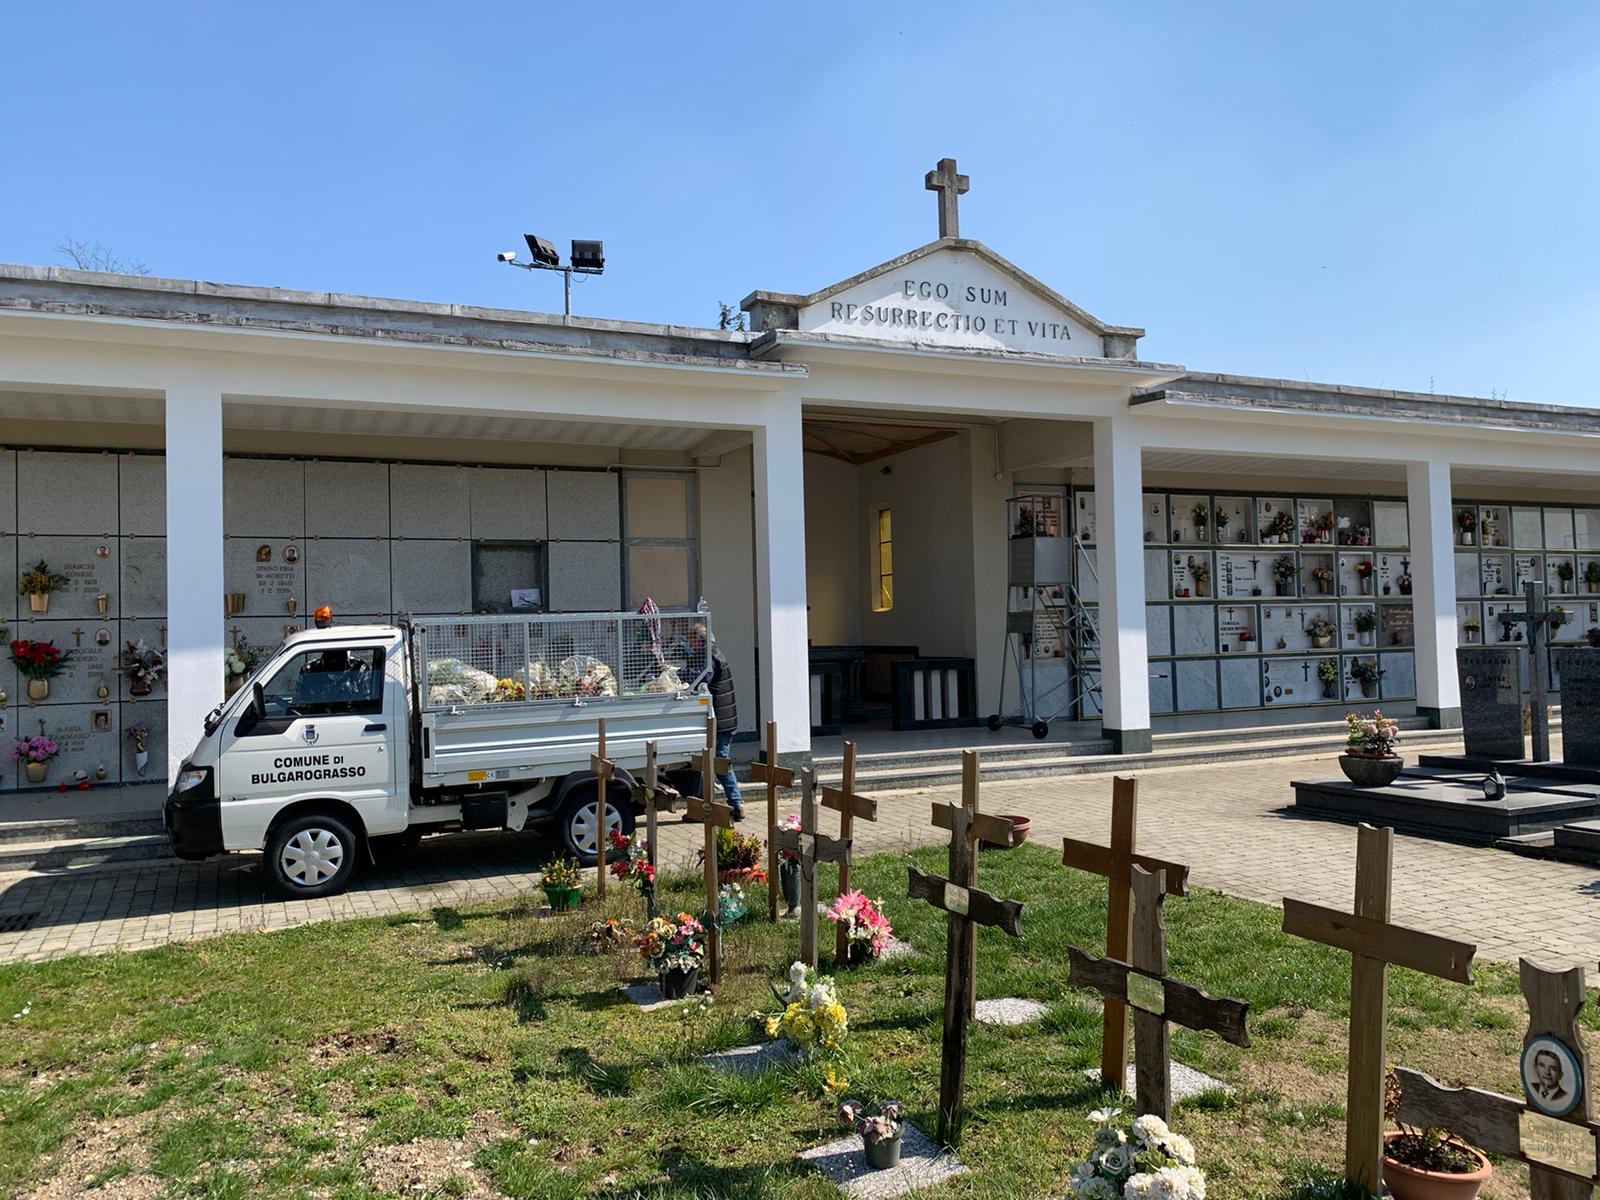 Bulgarograsso, pulizia del cimitero